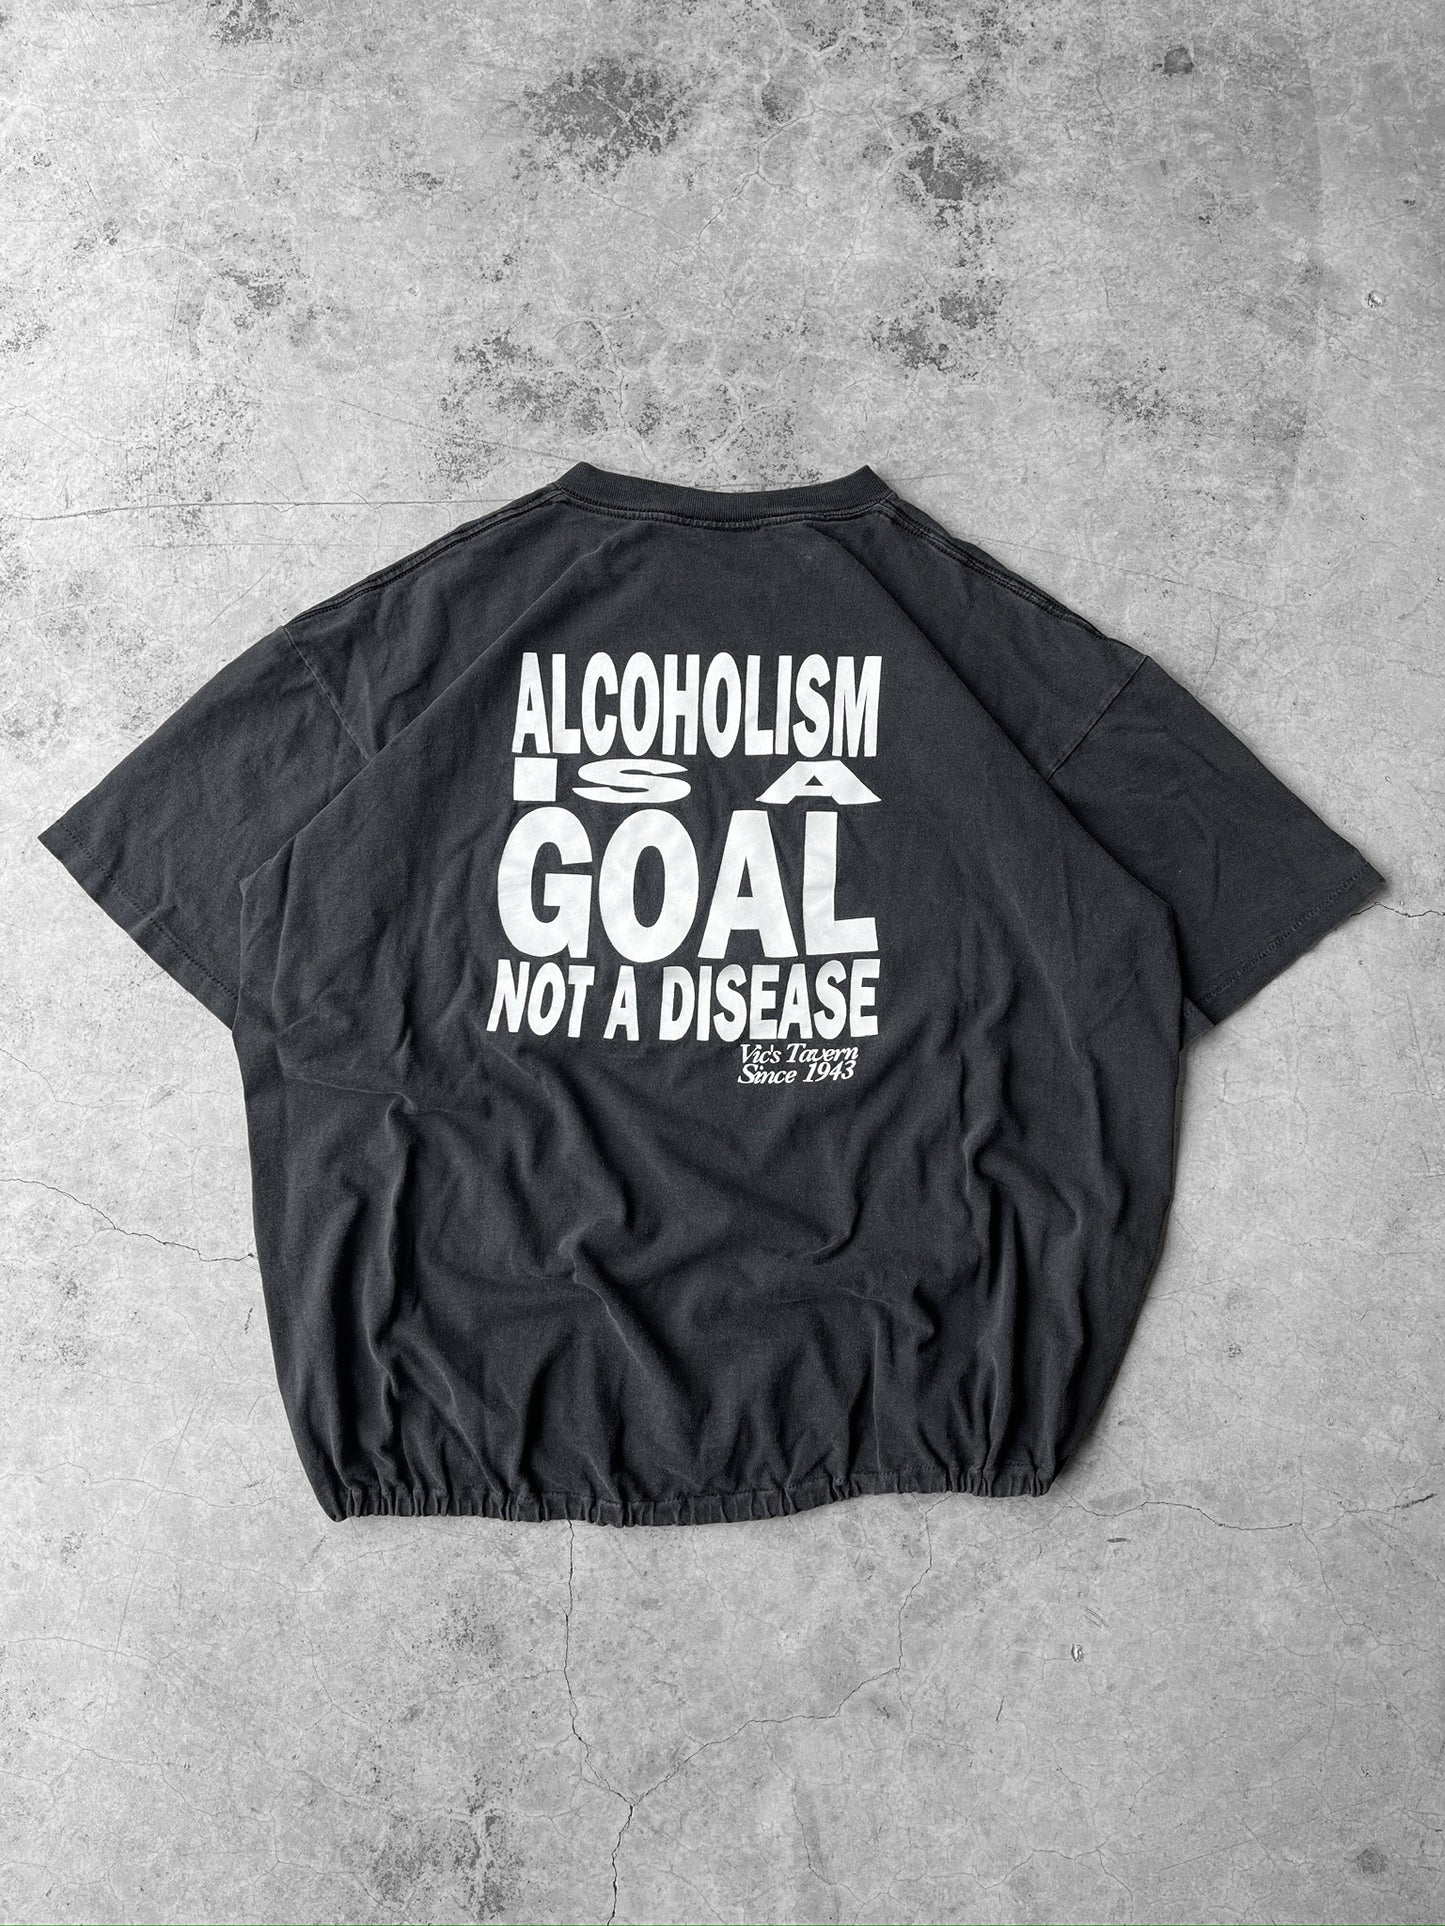 90’s Faded Black Vic's Tavern Alcohol Shirt